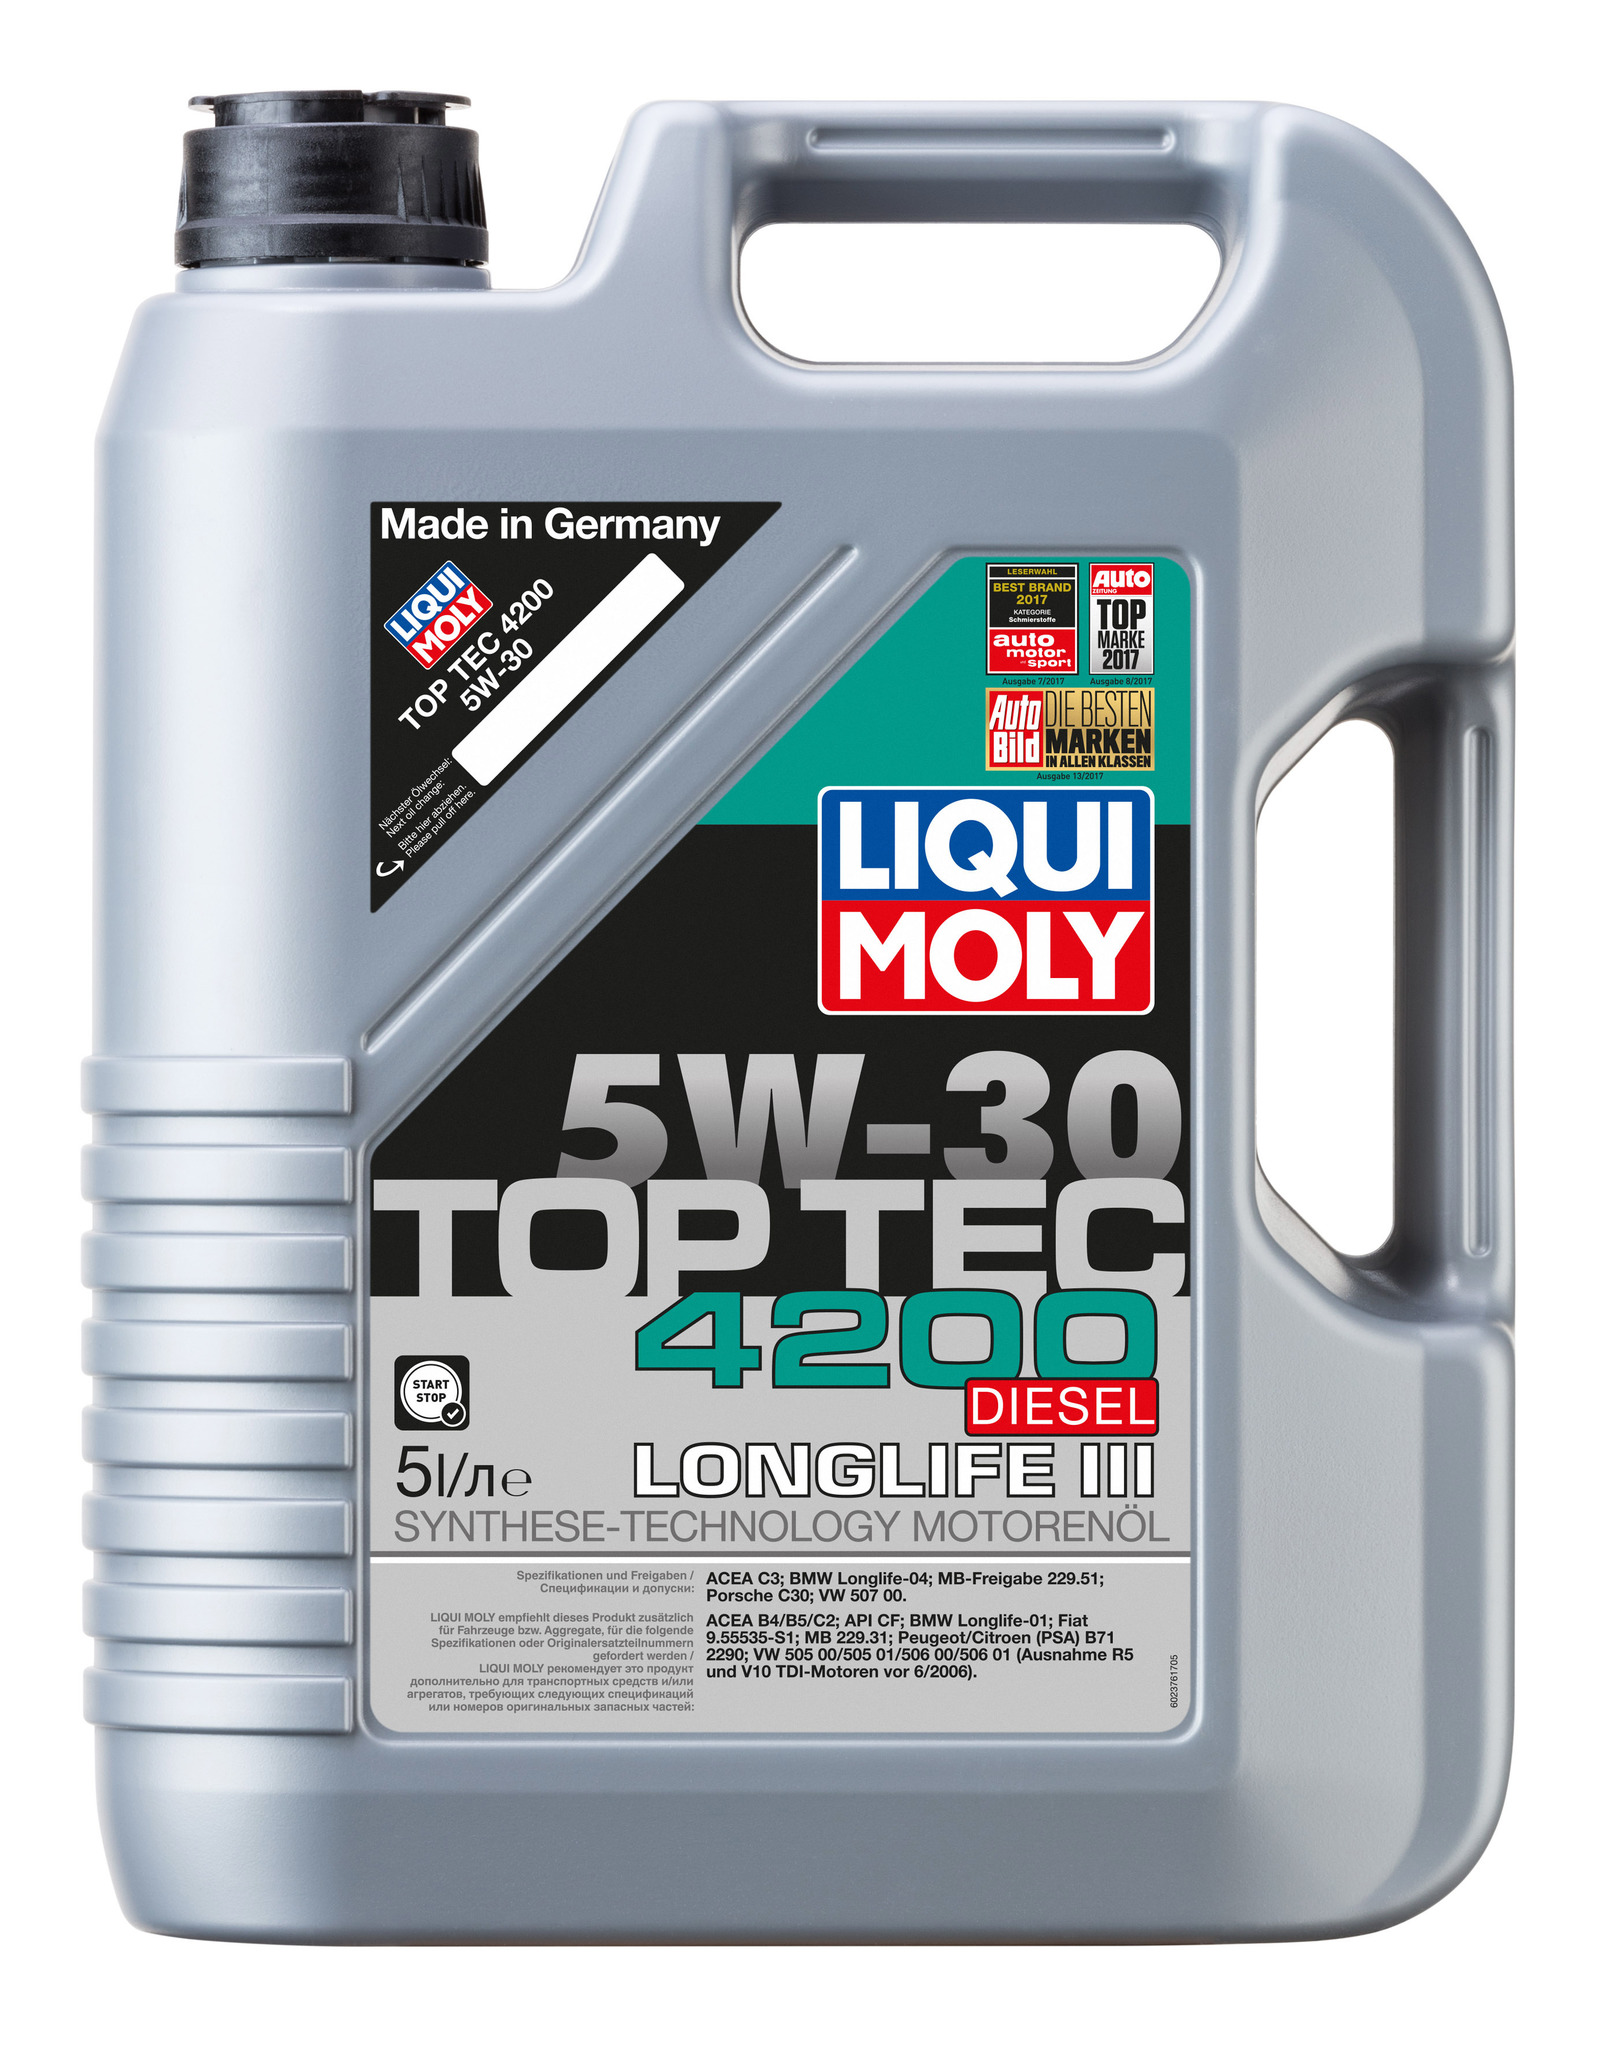 Моторное масло Liqui Moly Top Tec 4200 Diesel 5W30 hc синтетическое 5л